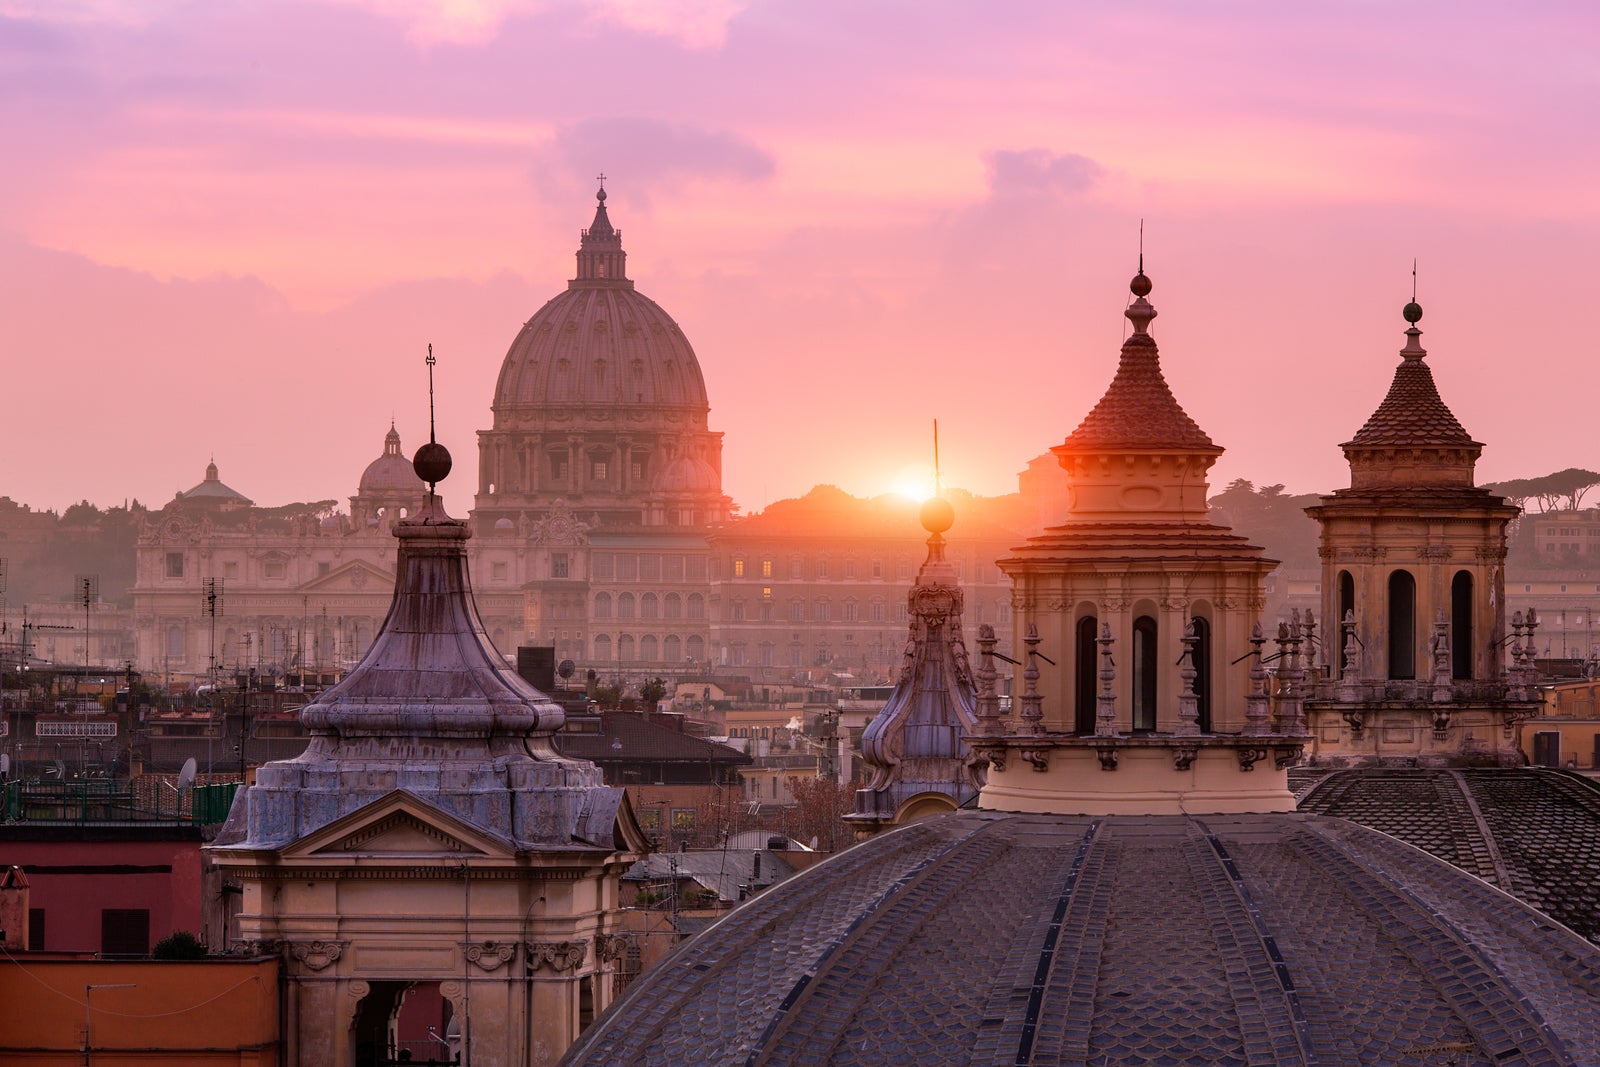 Rome sunset